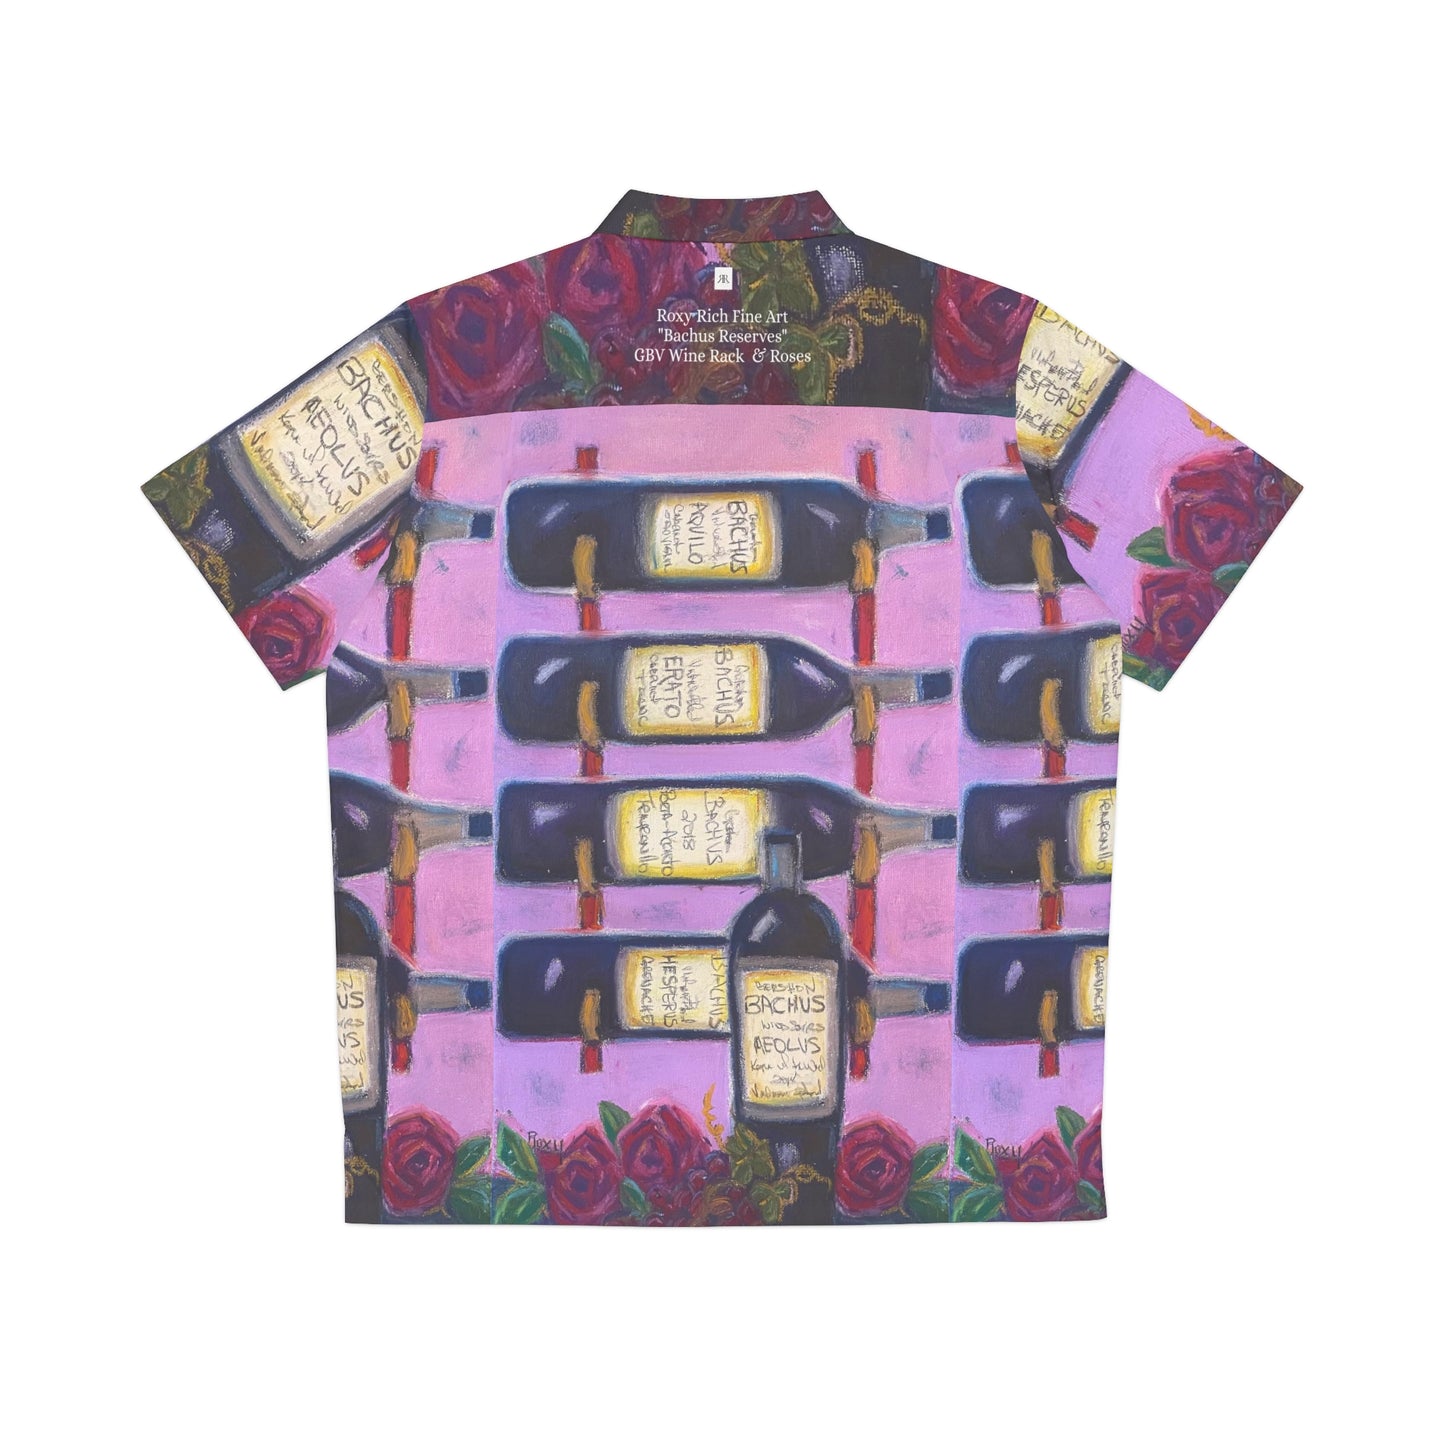 Bachus Reserves GBV Wine Rack and Roses Men's Hawaiian Shirt